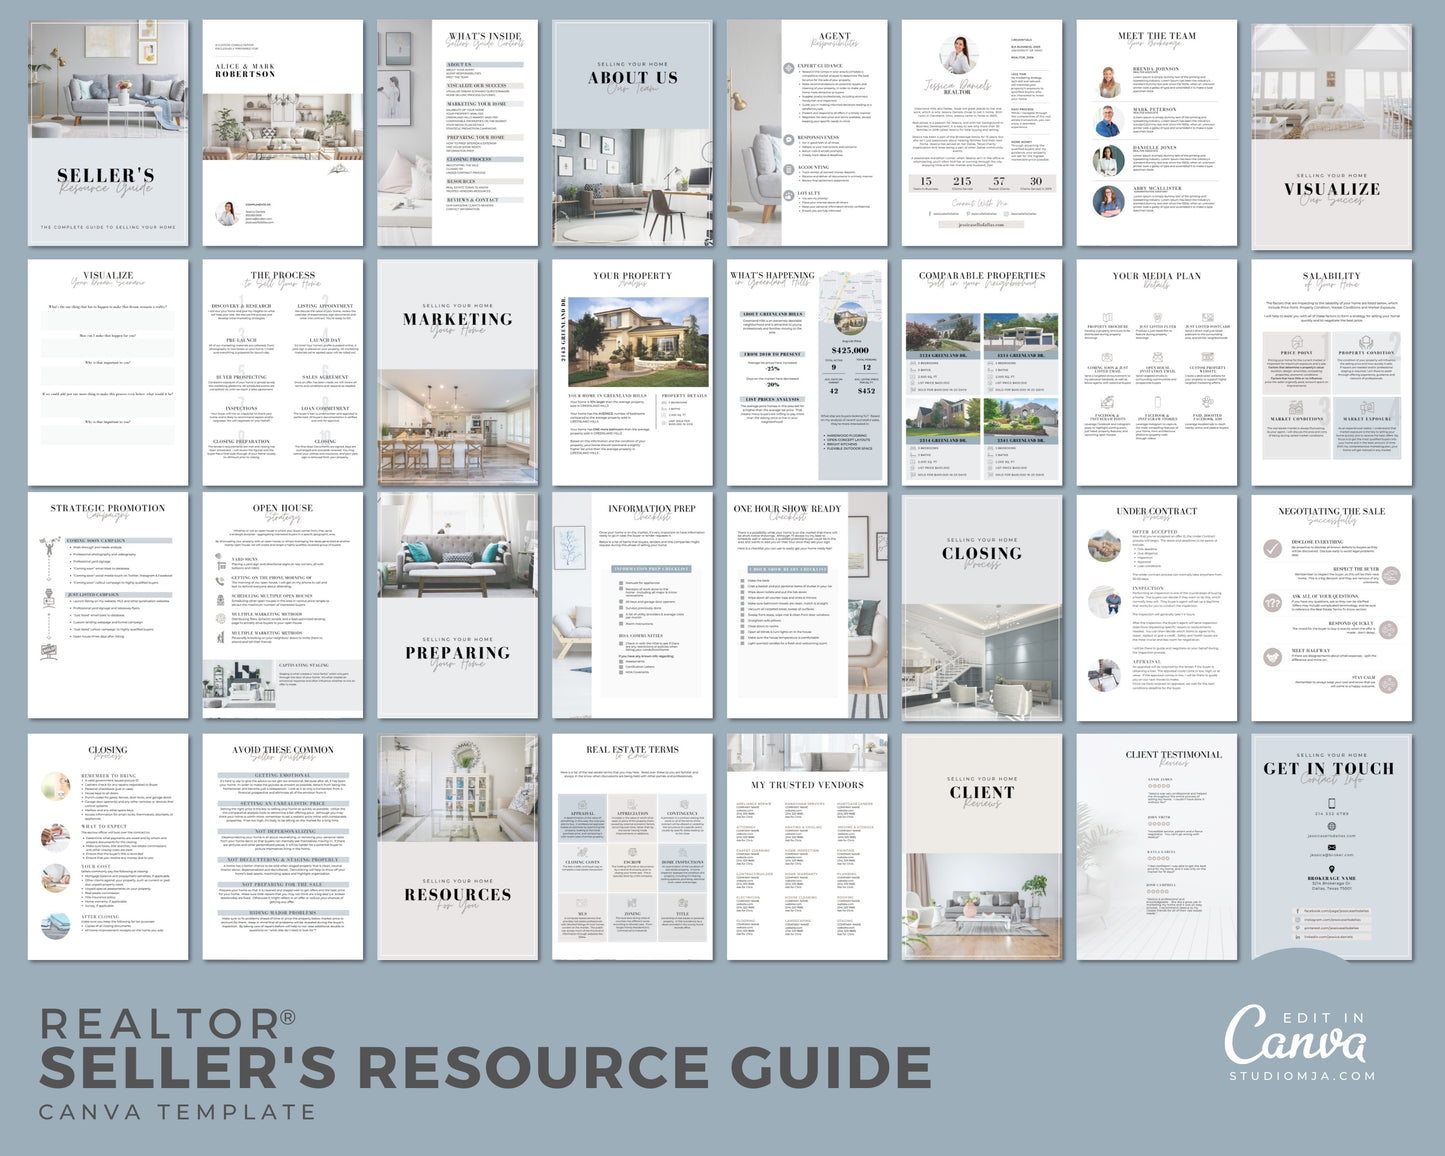 Real Estate Seller Buyer Guide Complete Set Templates